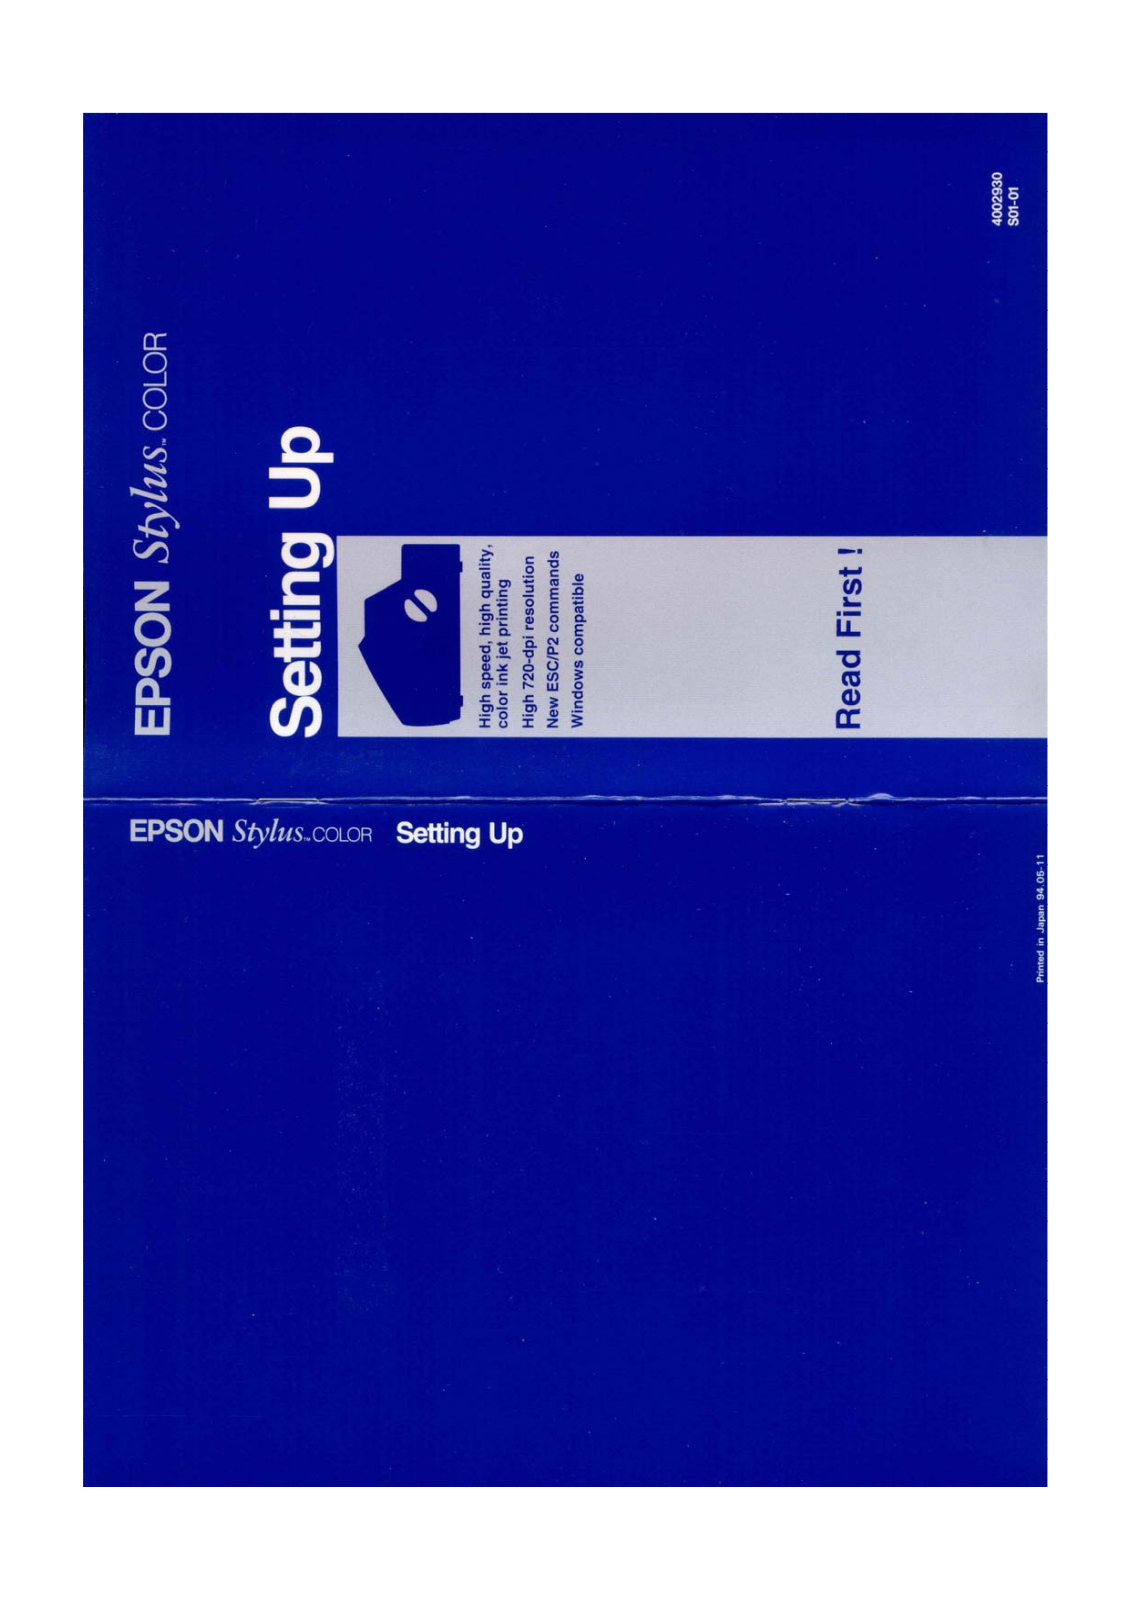 Epson STYLUS COLOR Settings Manual